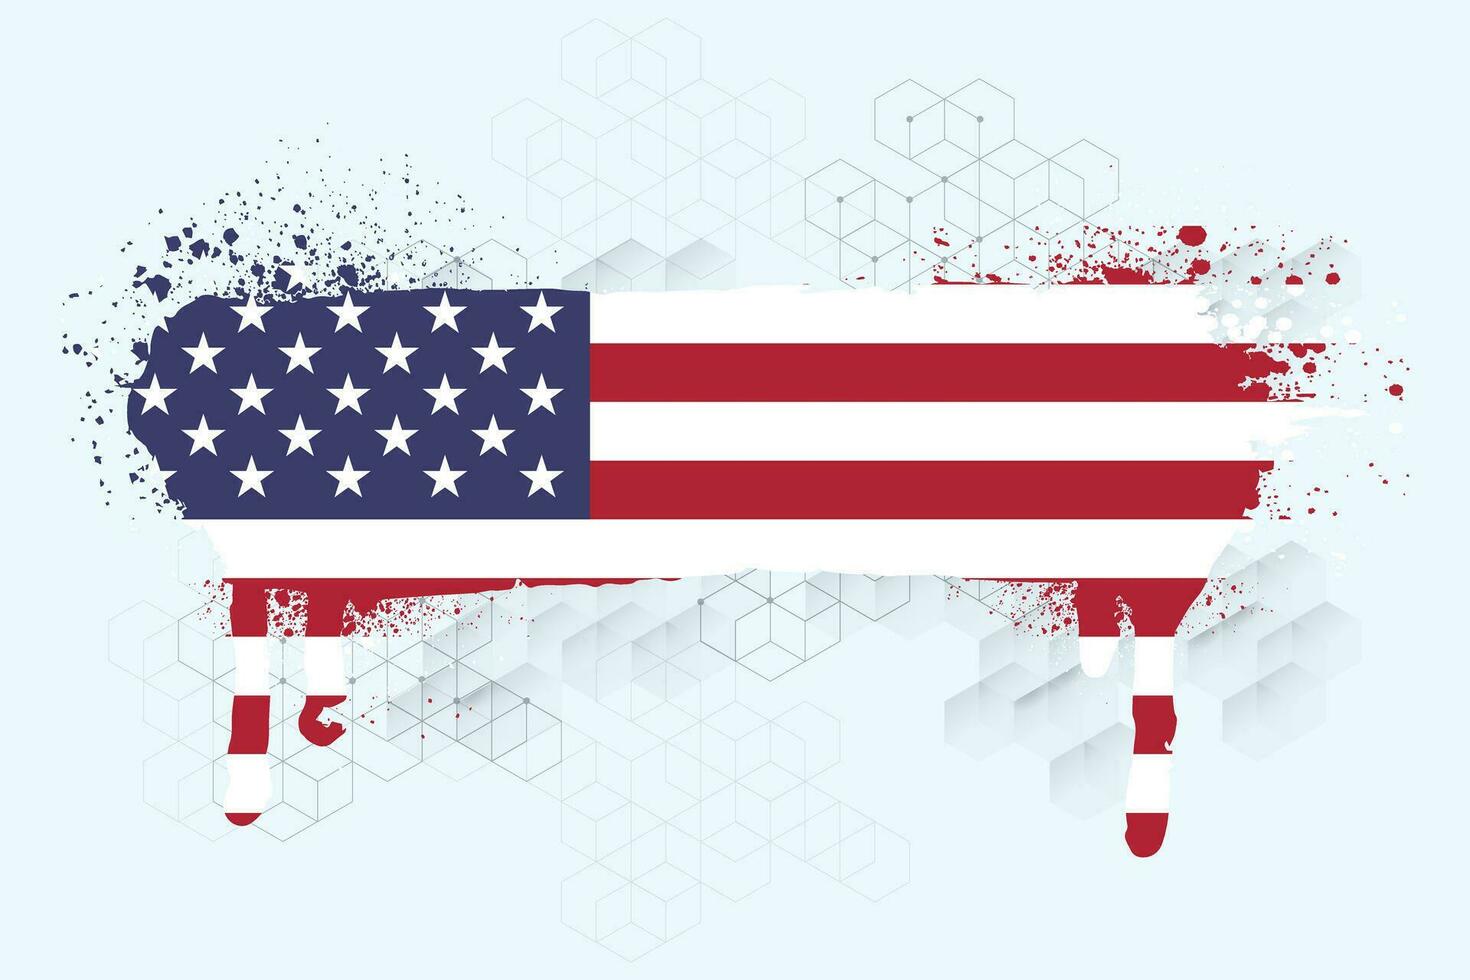 Amerikaans vlag silhouet, grunge Verenigde Staten van Amerika vlag reeks vector, grunge, vlag, silhouet, onafhankelijkheid, juli, 4e van juli, 4e juli, vlag silhouet vector